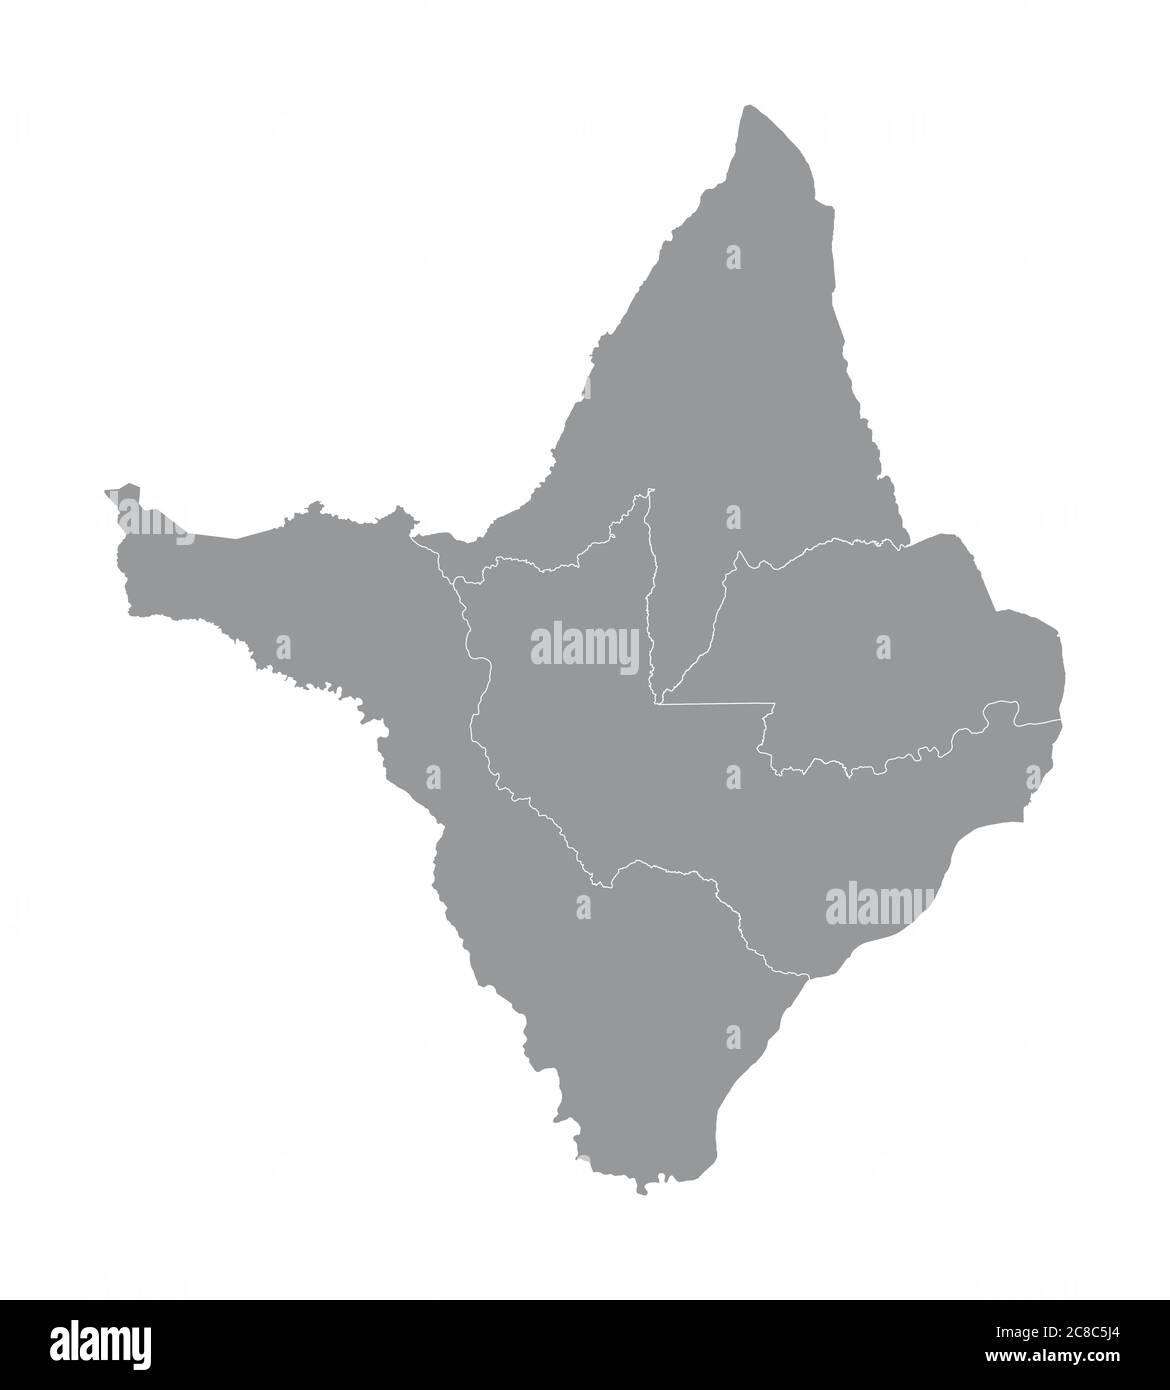 Amapa State regions map Stock Vector